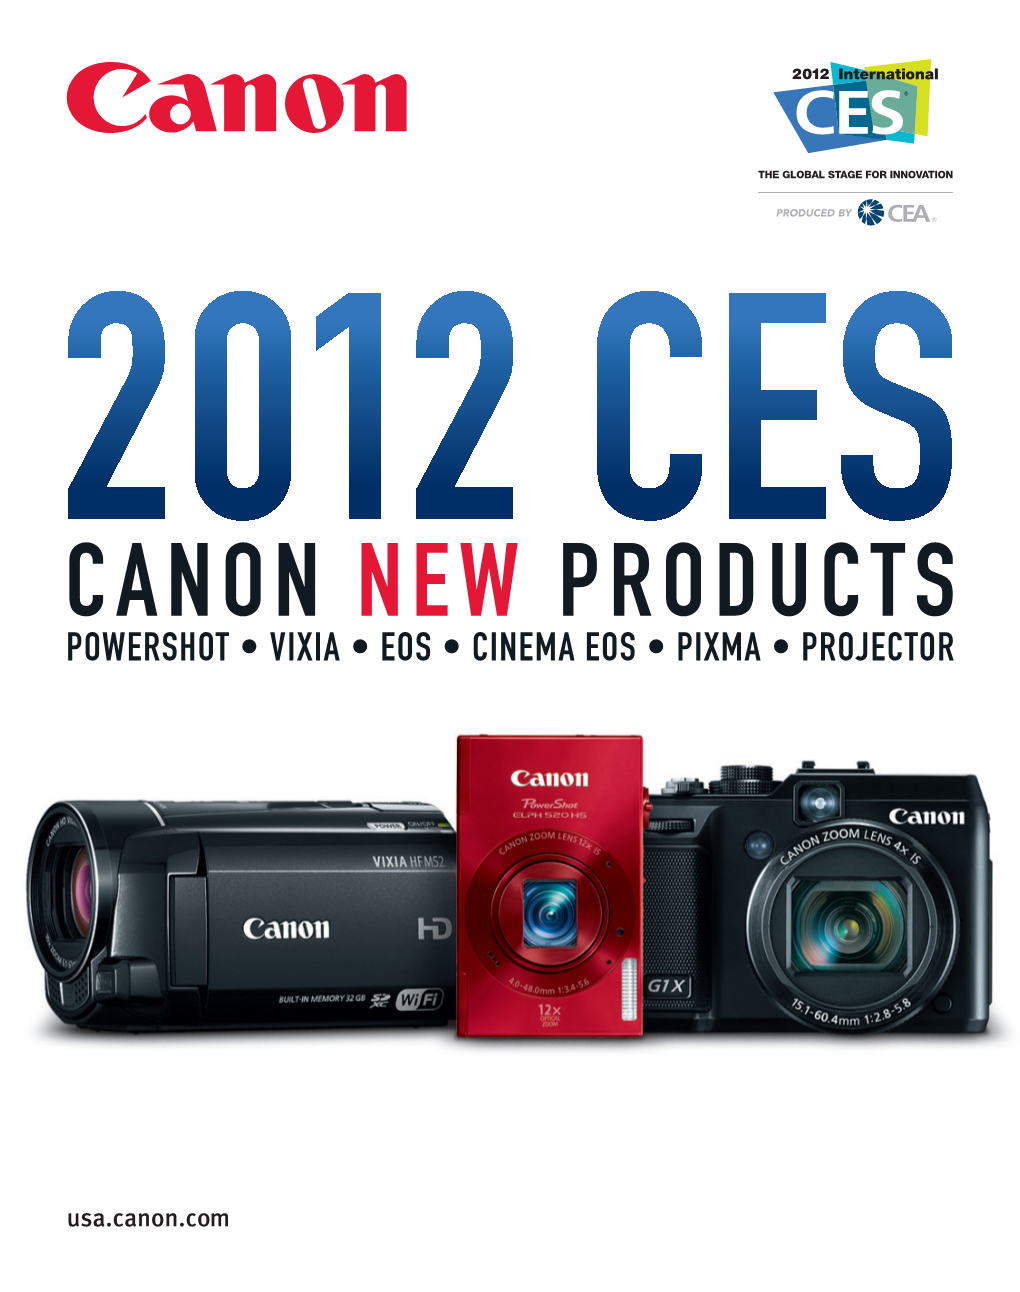 Canon New Products Powershot • Vixia • Eos • Cinema Eos • Pixma • Projector